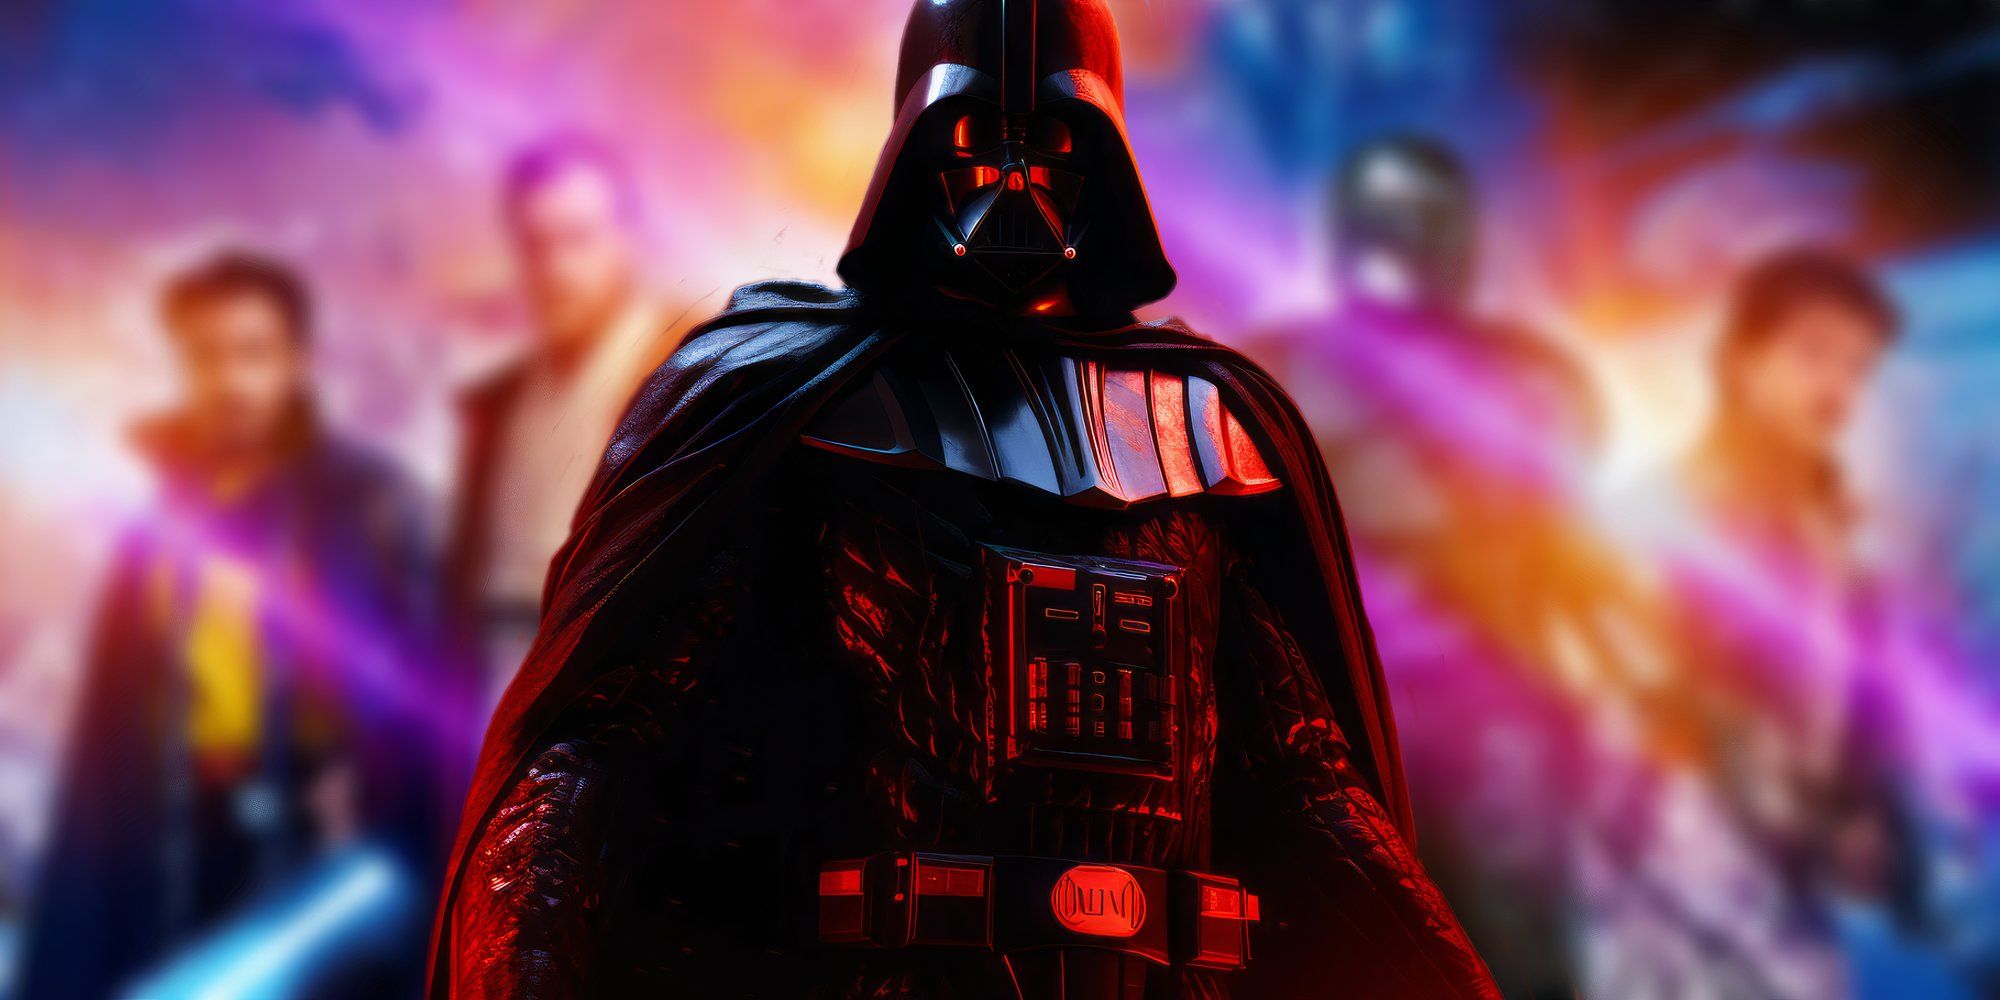 A blurred image of Star Wars' TV characters behind Darth Vader